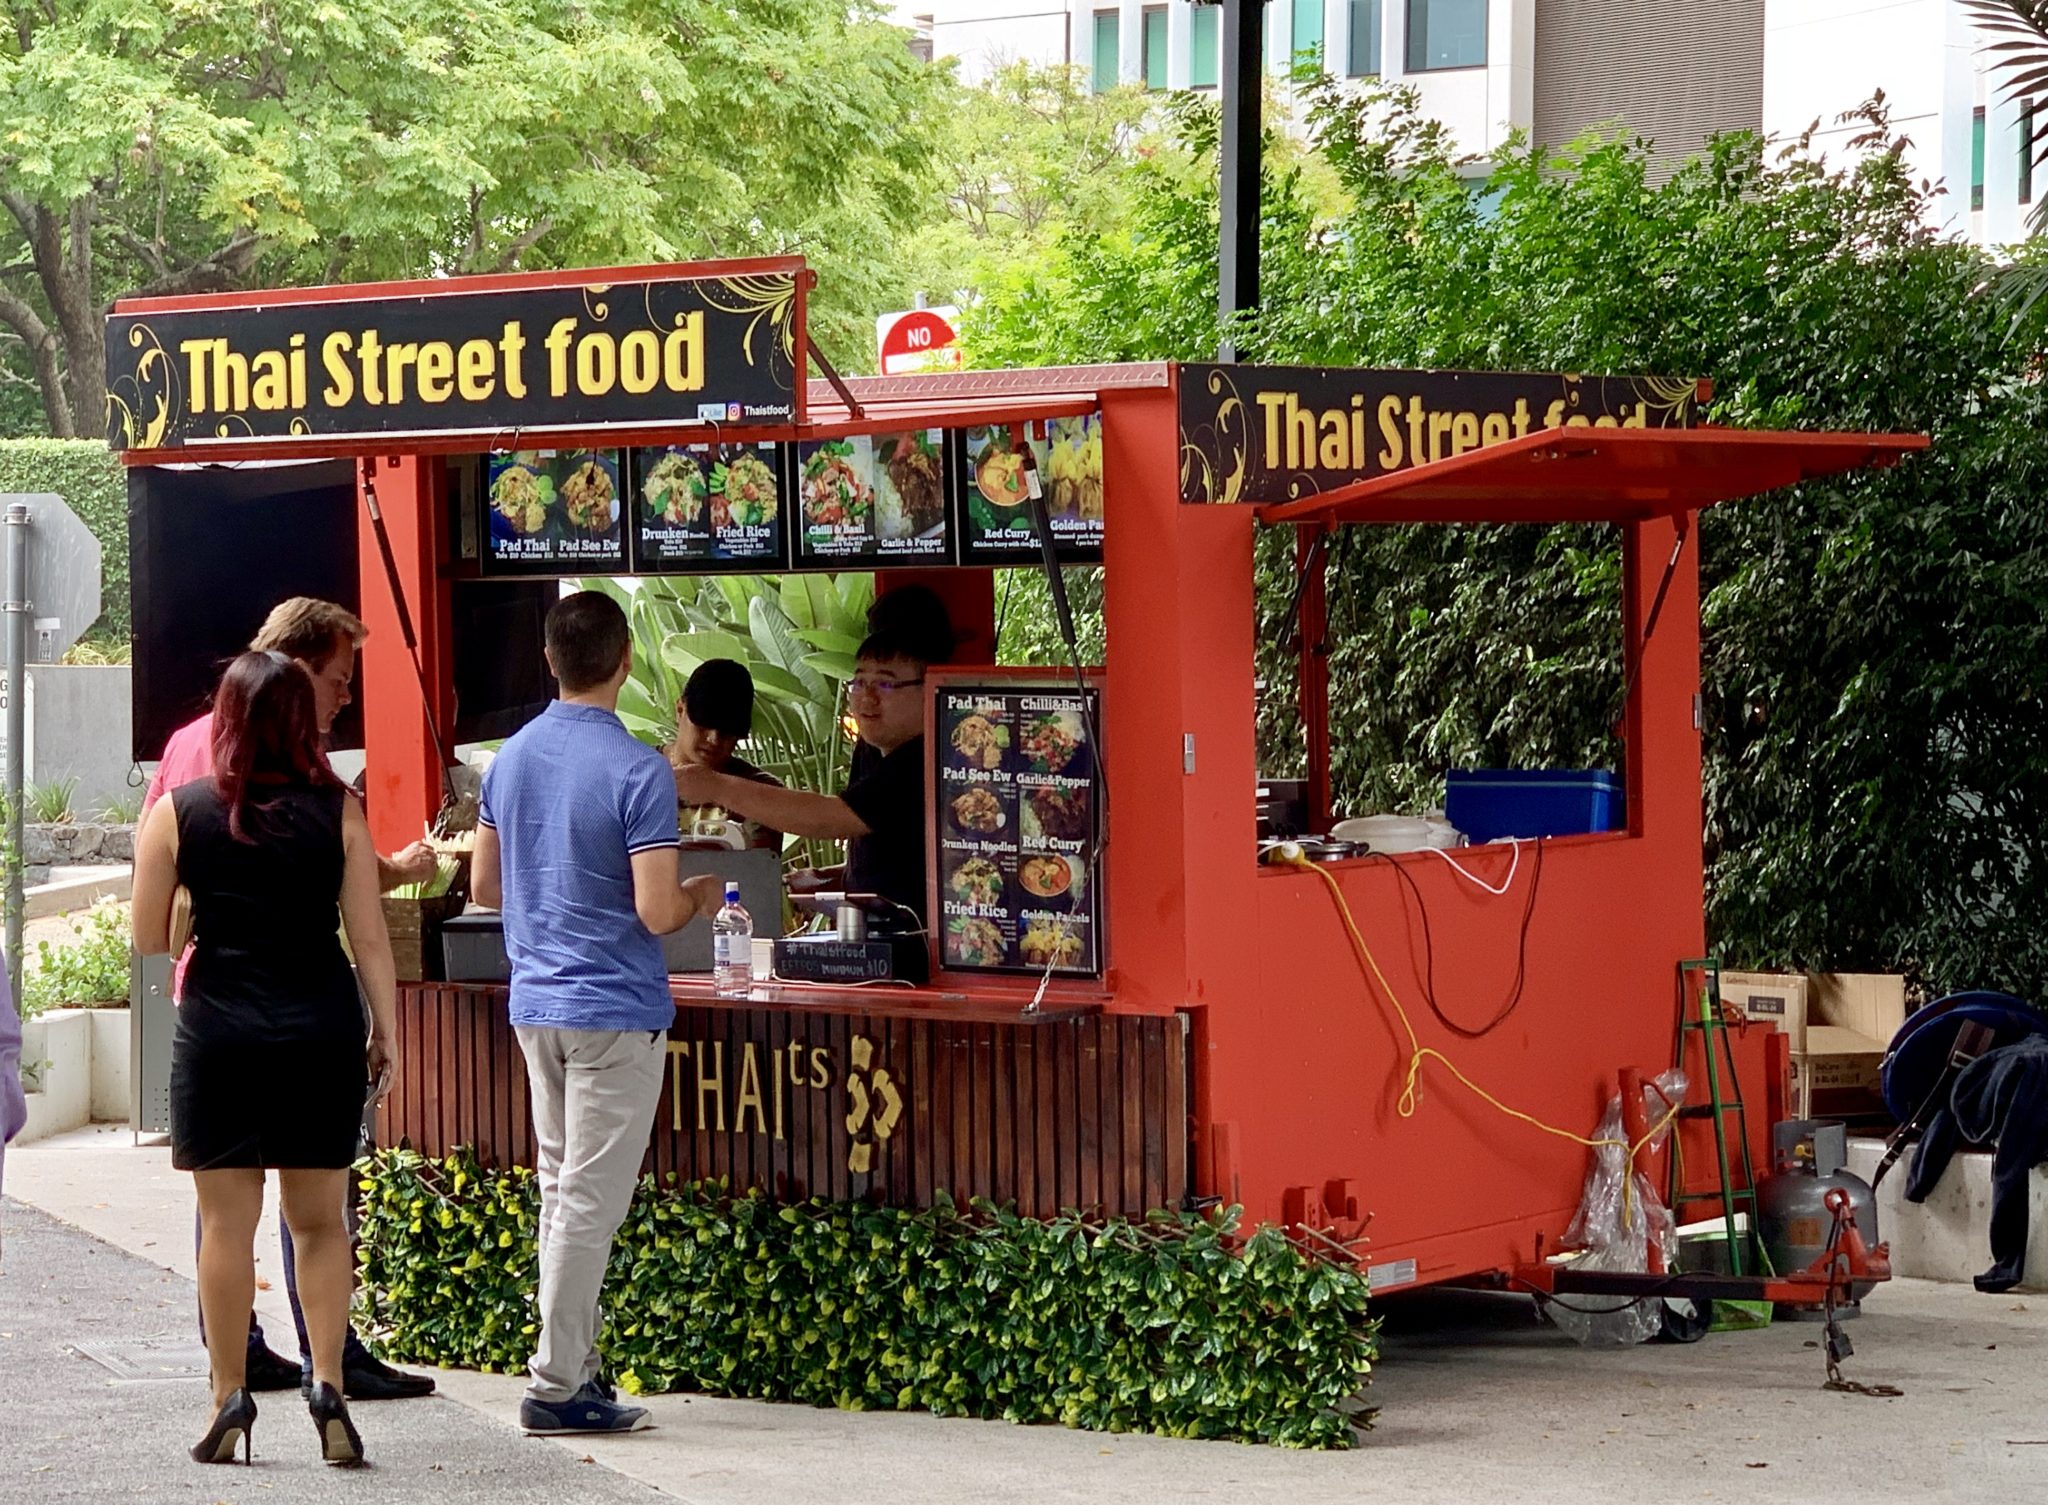 Thai Street food truck, Brisbane, Australia